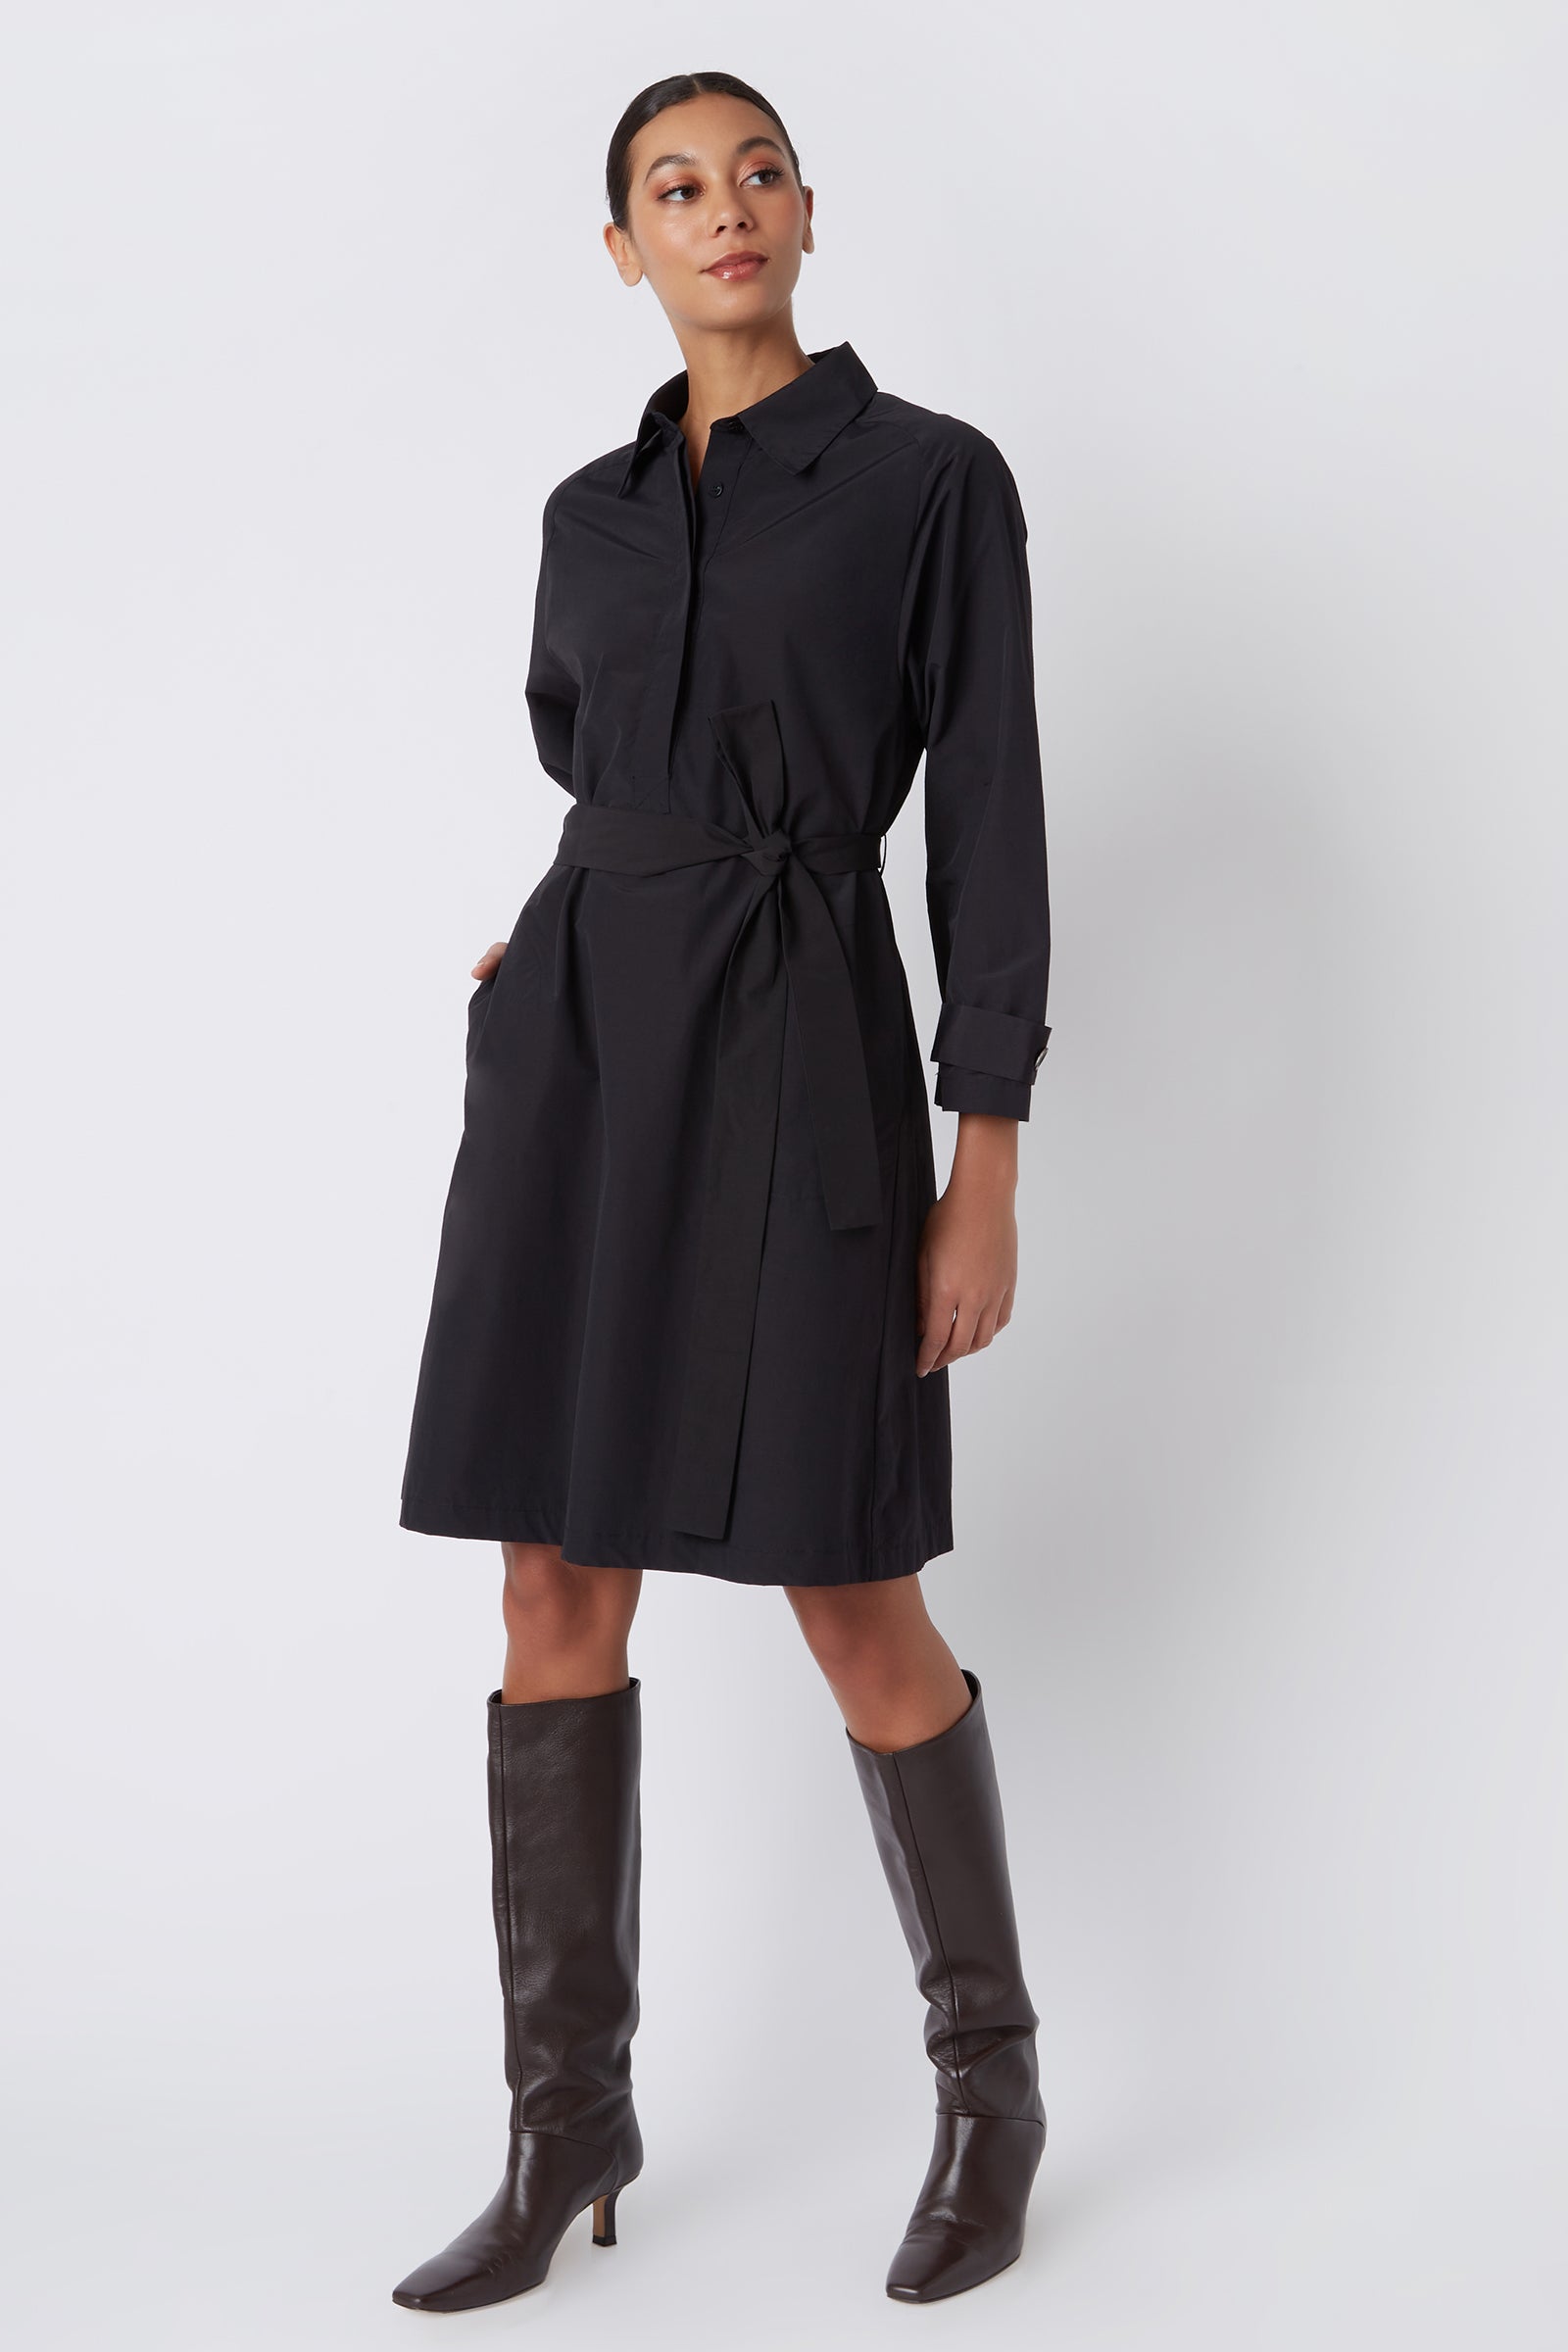 Kal Rieman Bonnie Pleat Back Dress in Black Italian Broadcloth on Model Walking Full Front View